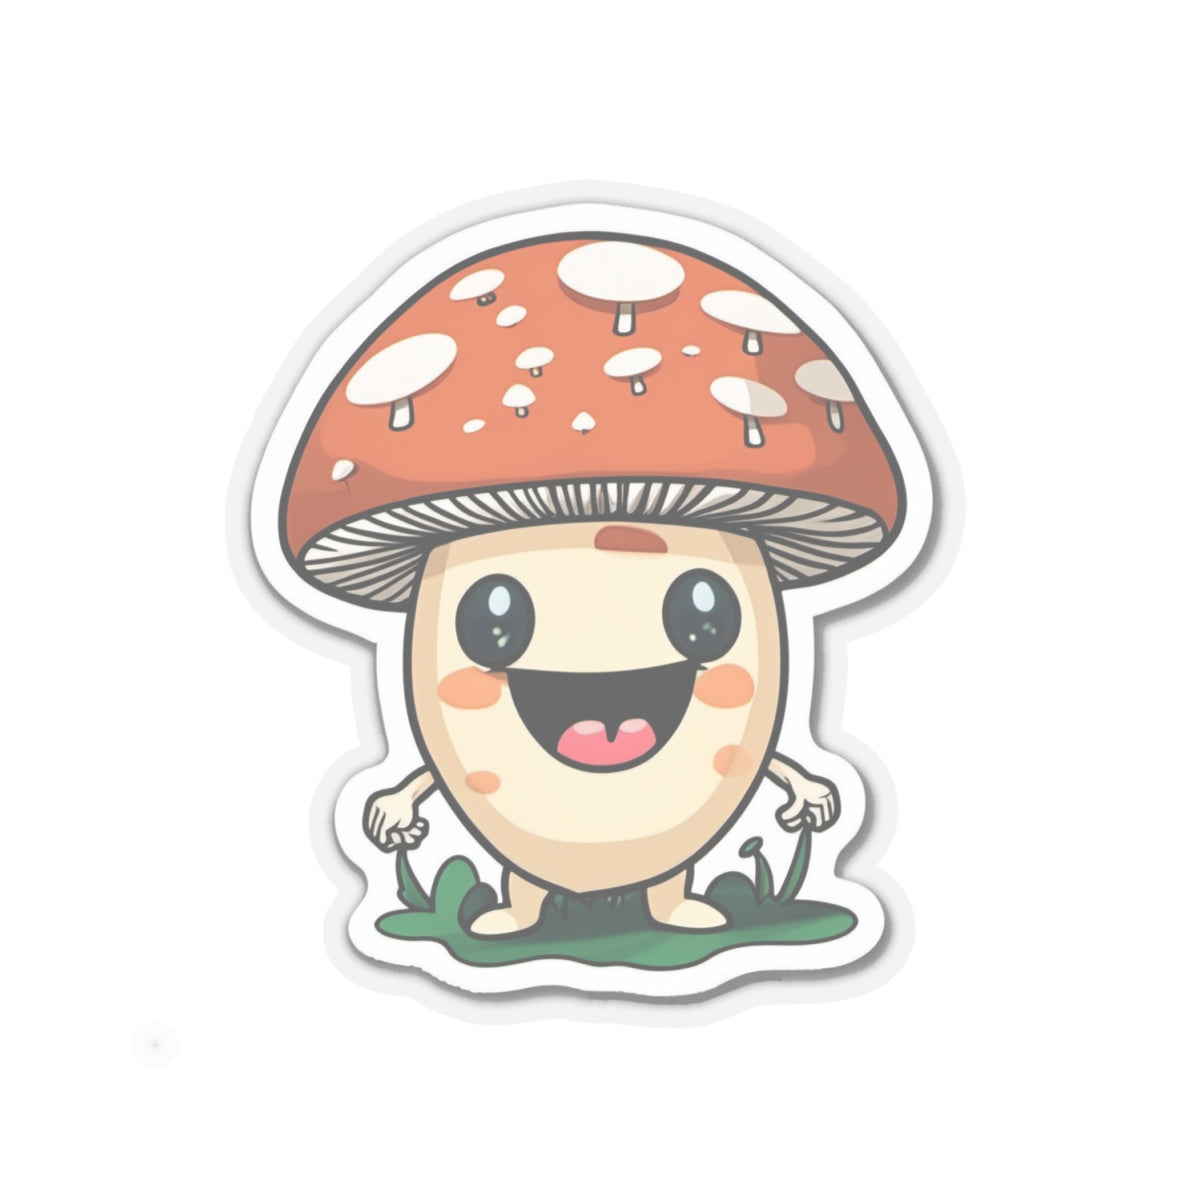 Mushroom stickers